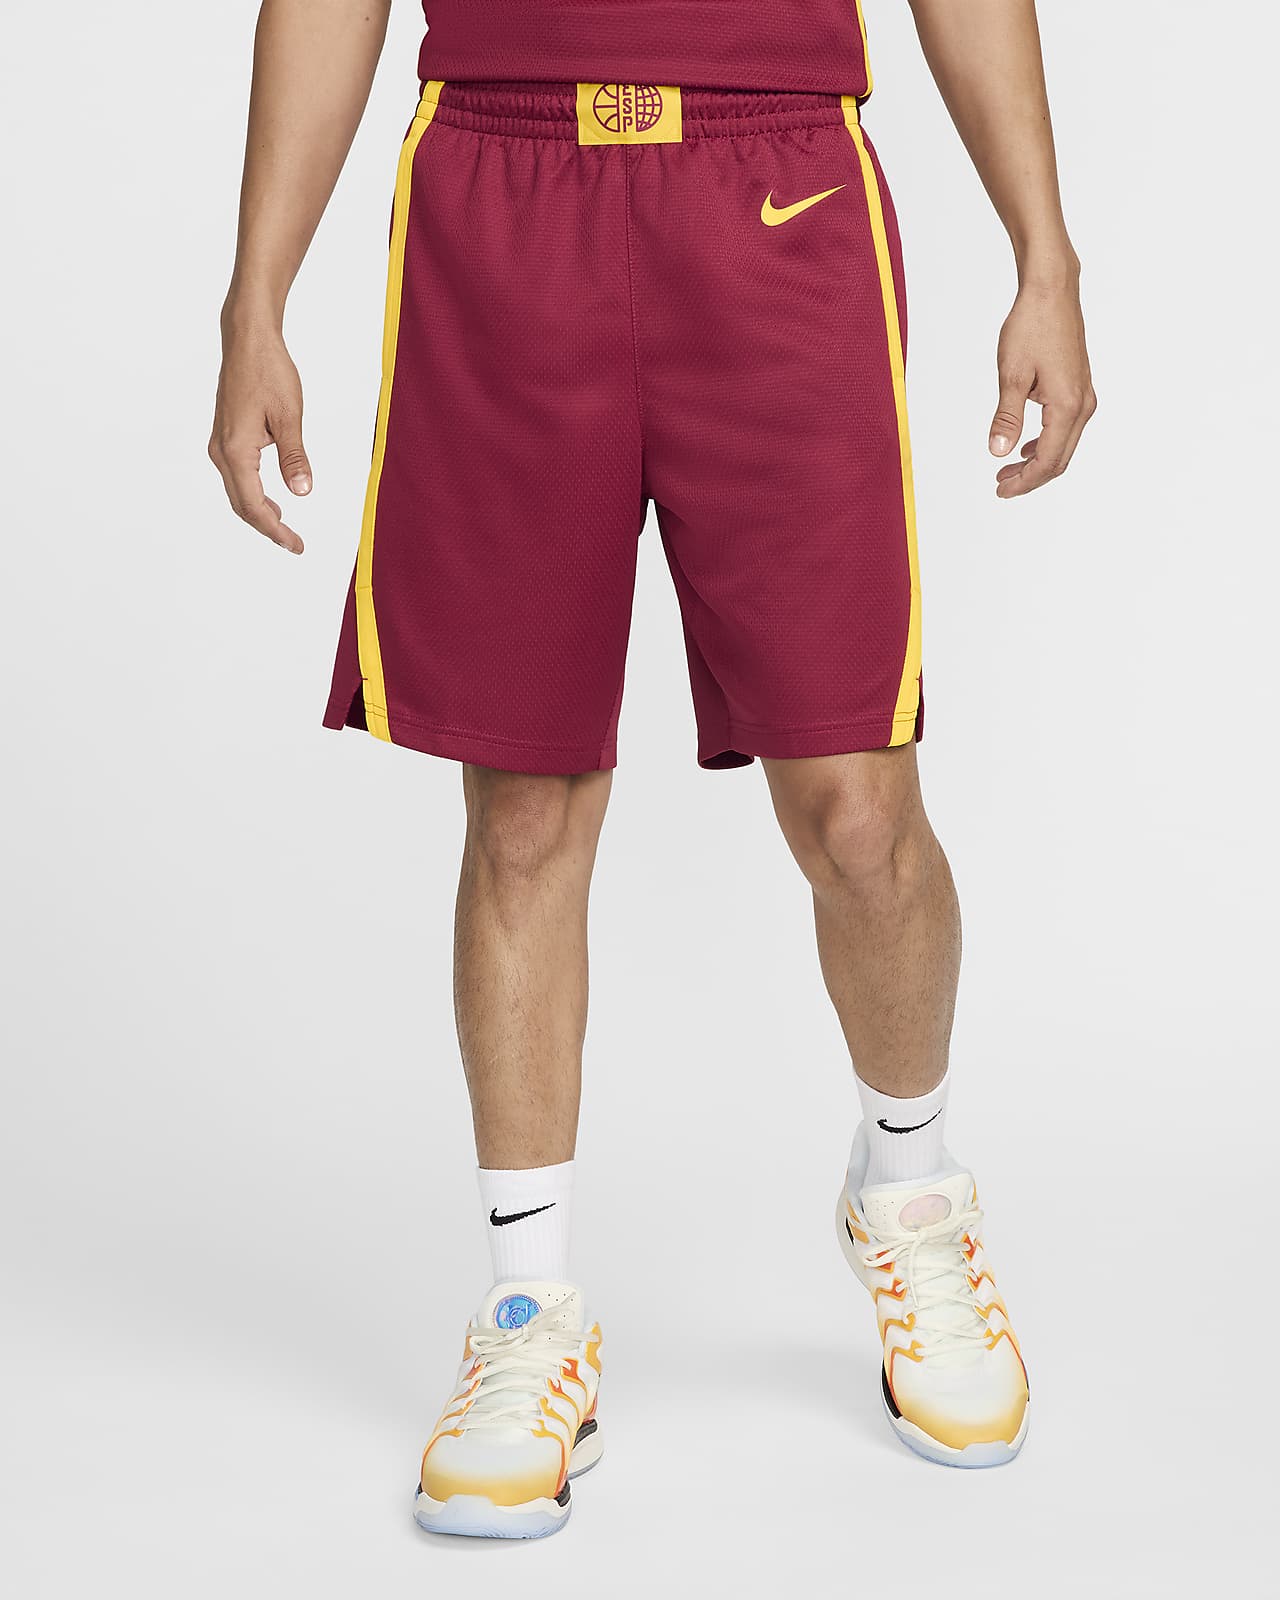 Spain Limited Road Men's Nike Basketball Jersey